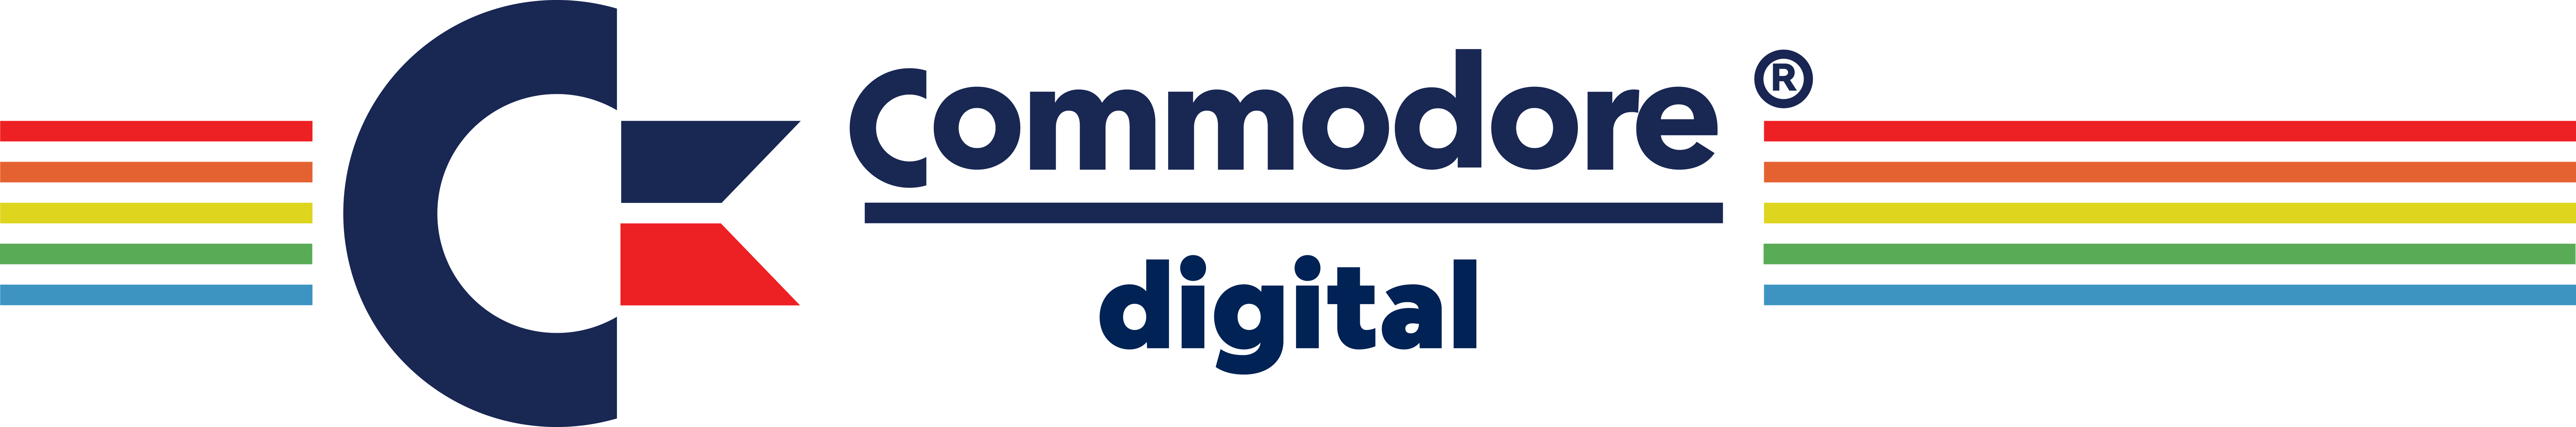 logo commodore digital